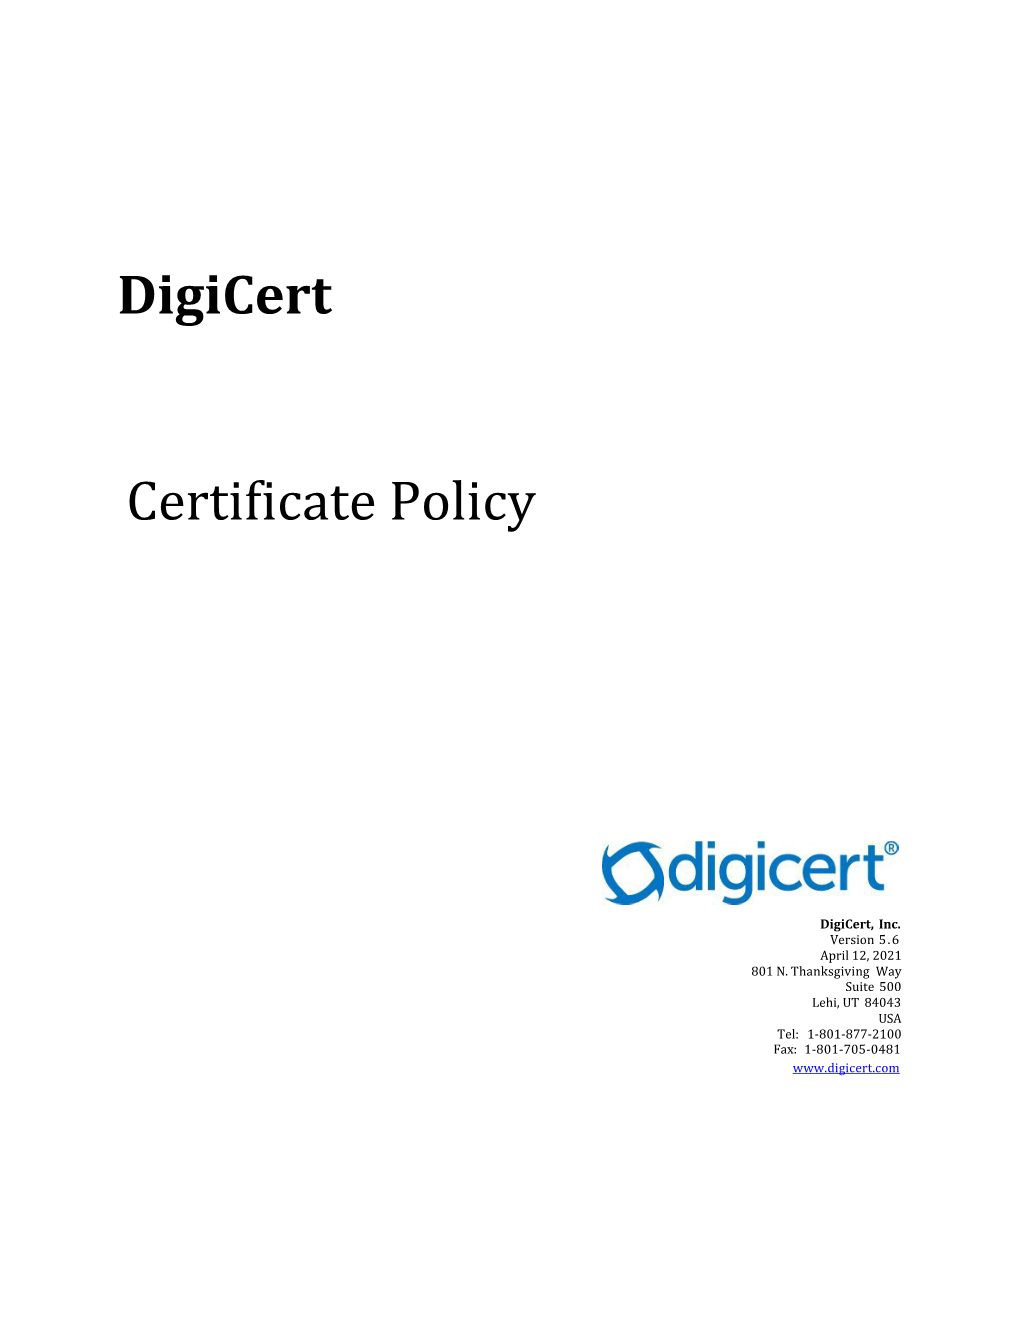 Digicert Certificate Policy Version